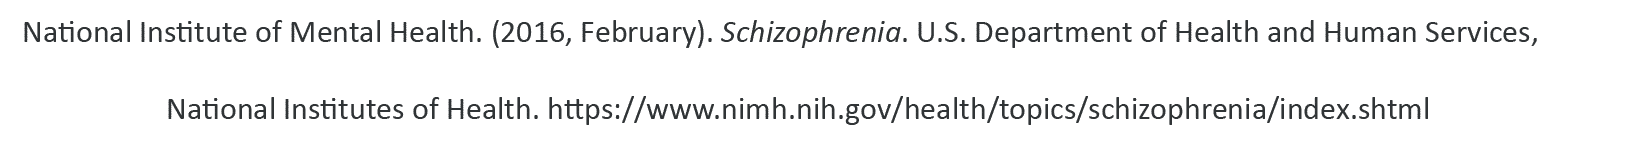 National Institute of Mental Health. (2016, February). Schizophrenia. https://www.nimh.nih.gov/health/topics/schizophrenia/index.shtml